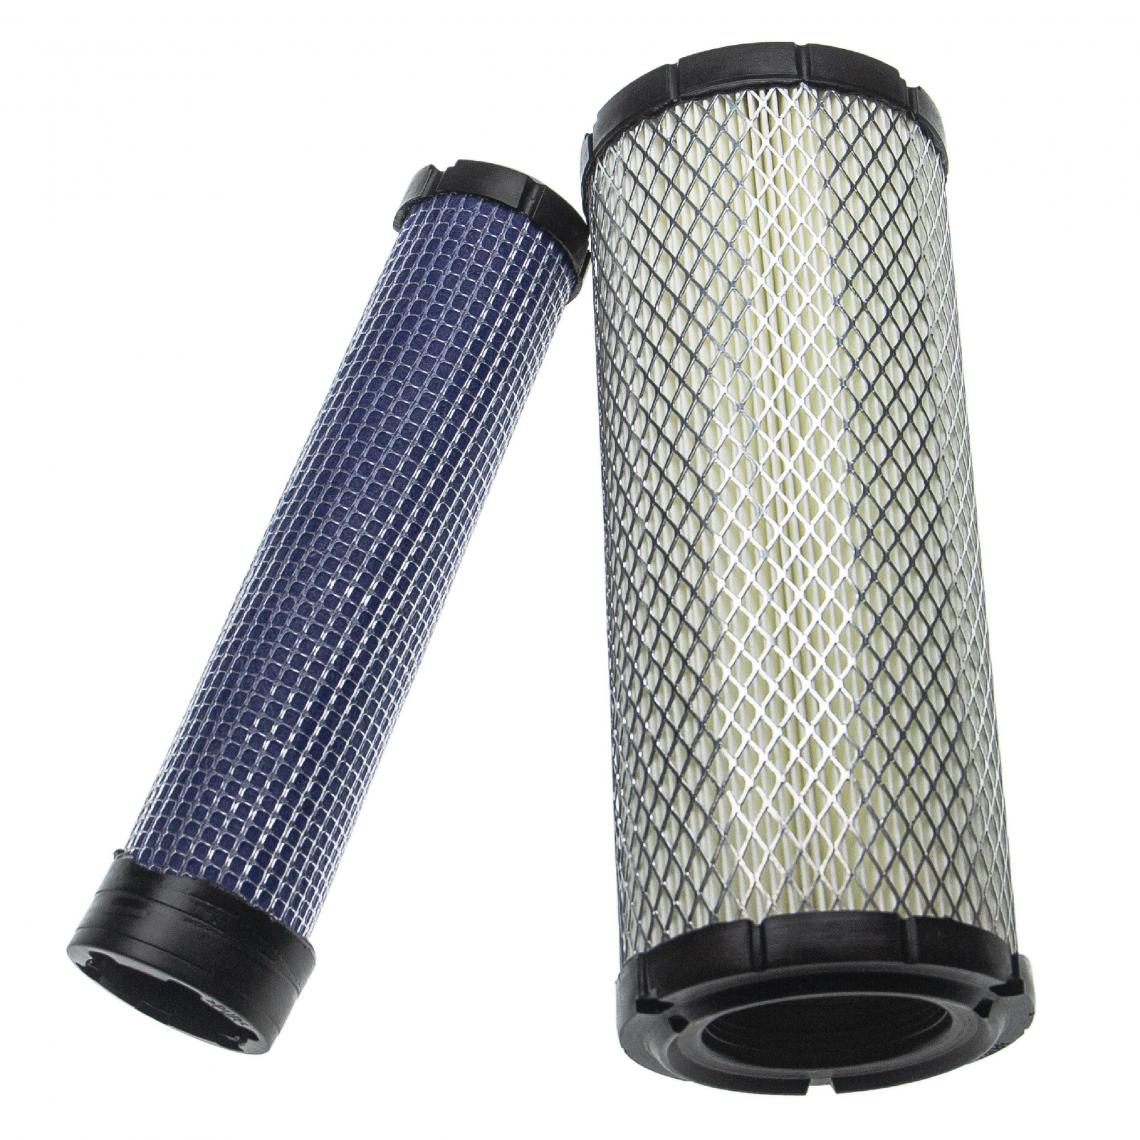 Vhbw - vhbw Lot de filtres compatible avec New Holland 3050, 8N boomer, T1510, T2210, T2220, T2310 engin de chantier; 1x filtre interne, 1x filtre extérieur - Autre appareil de mesure